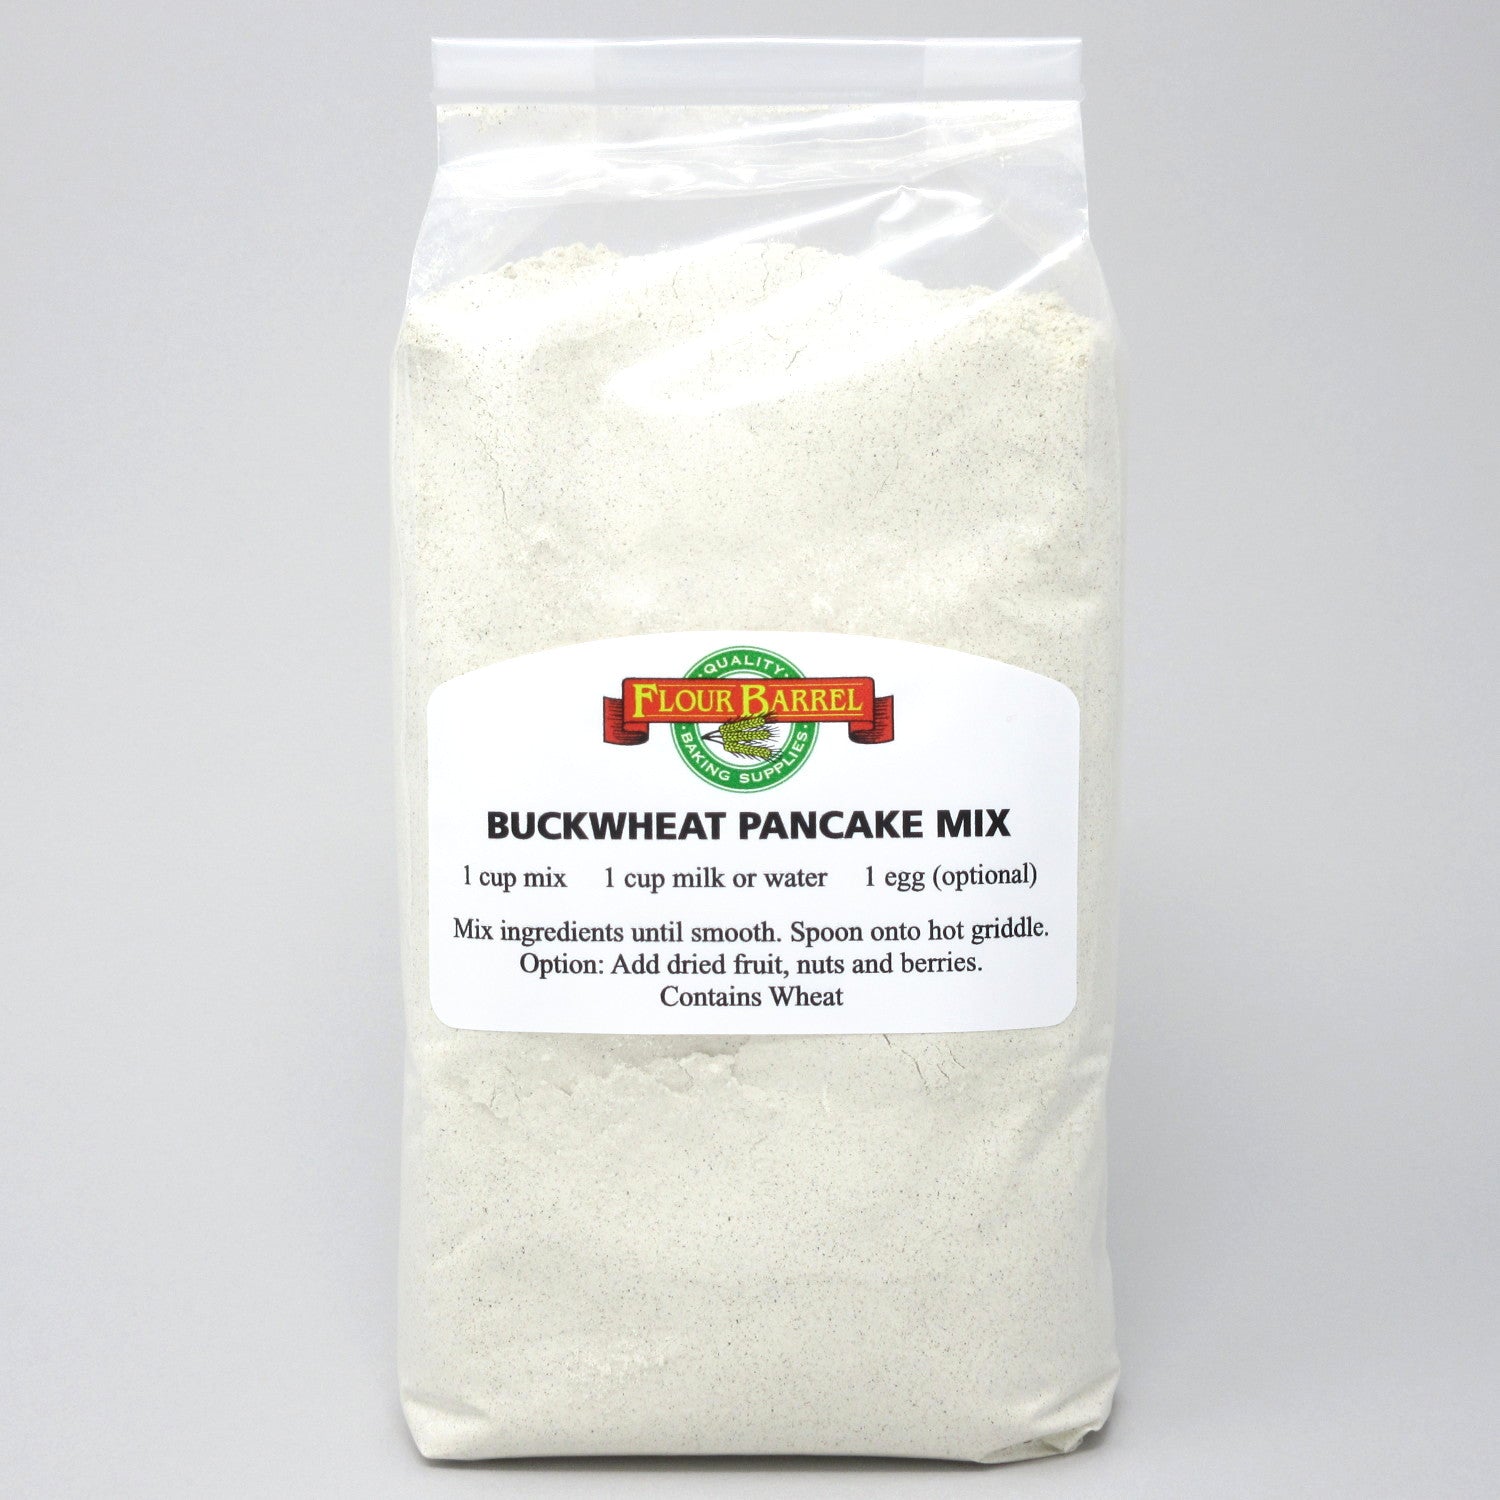 Flour Barrel product image - Buckwheat Pancake Mix